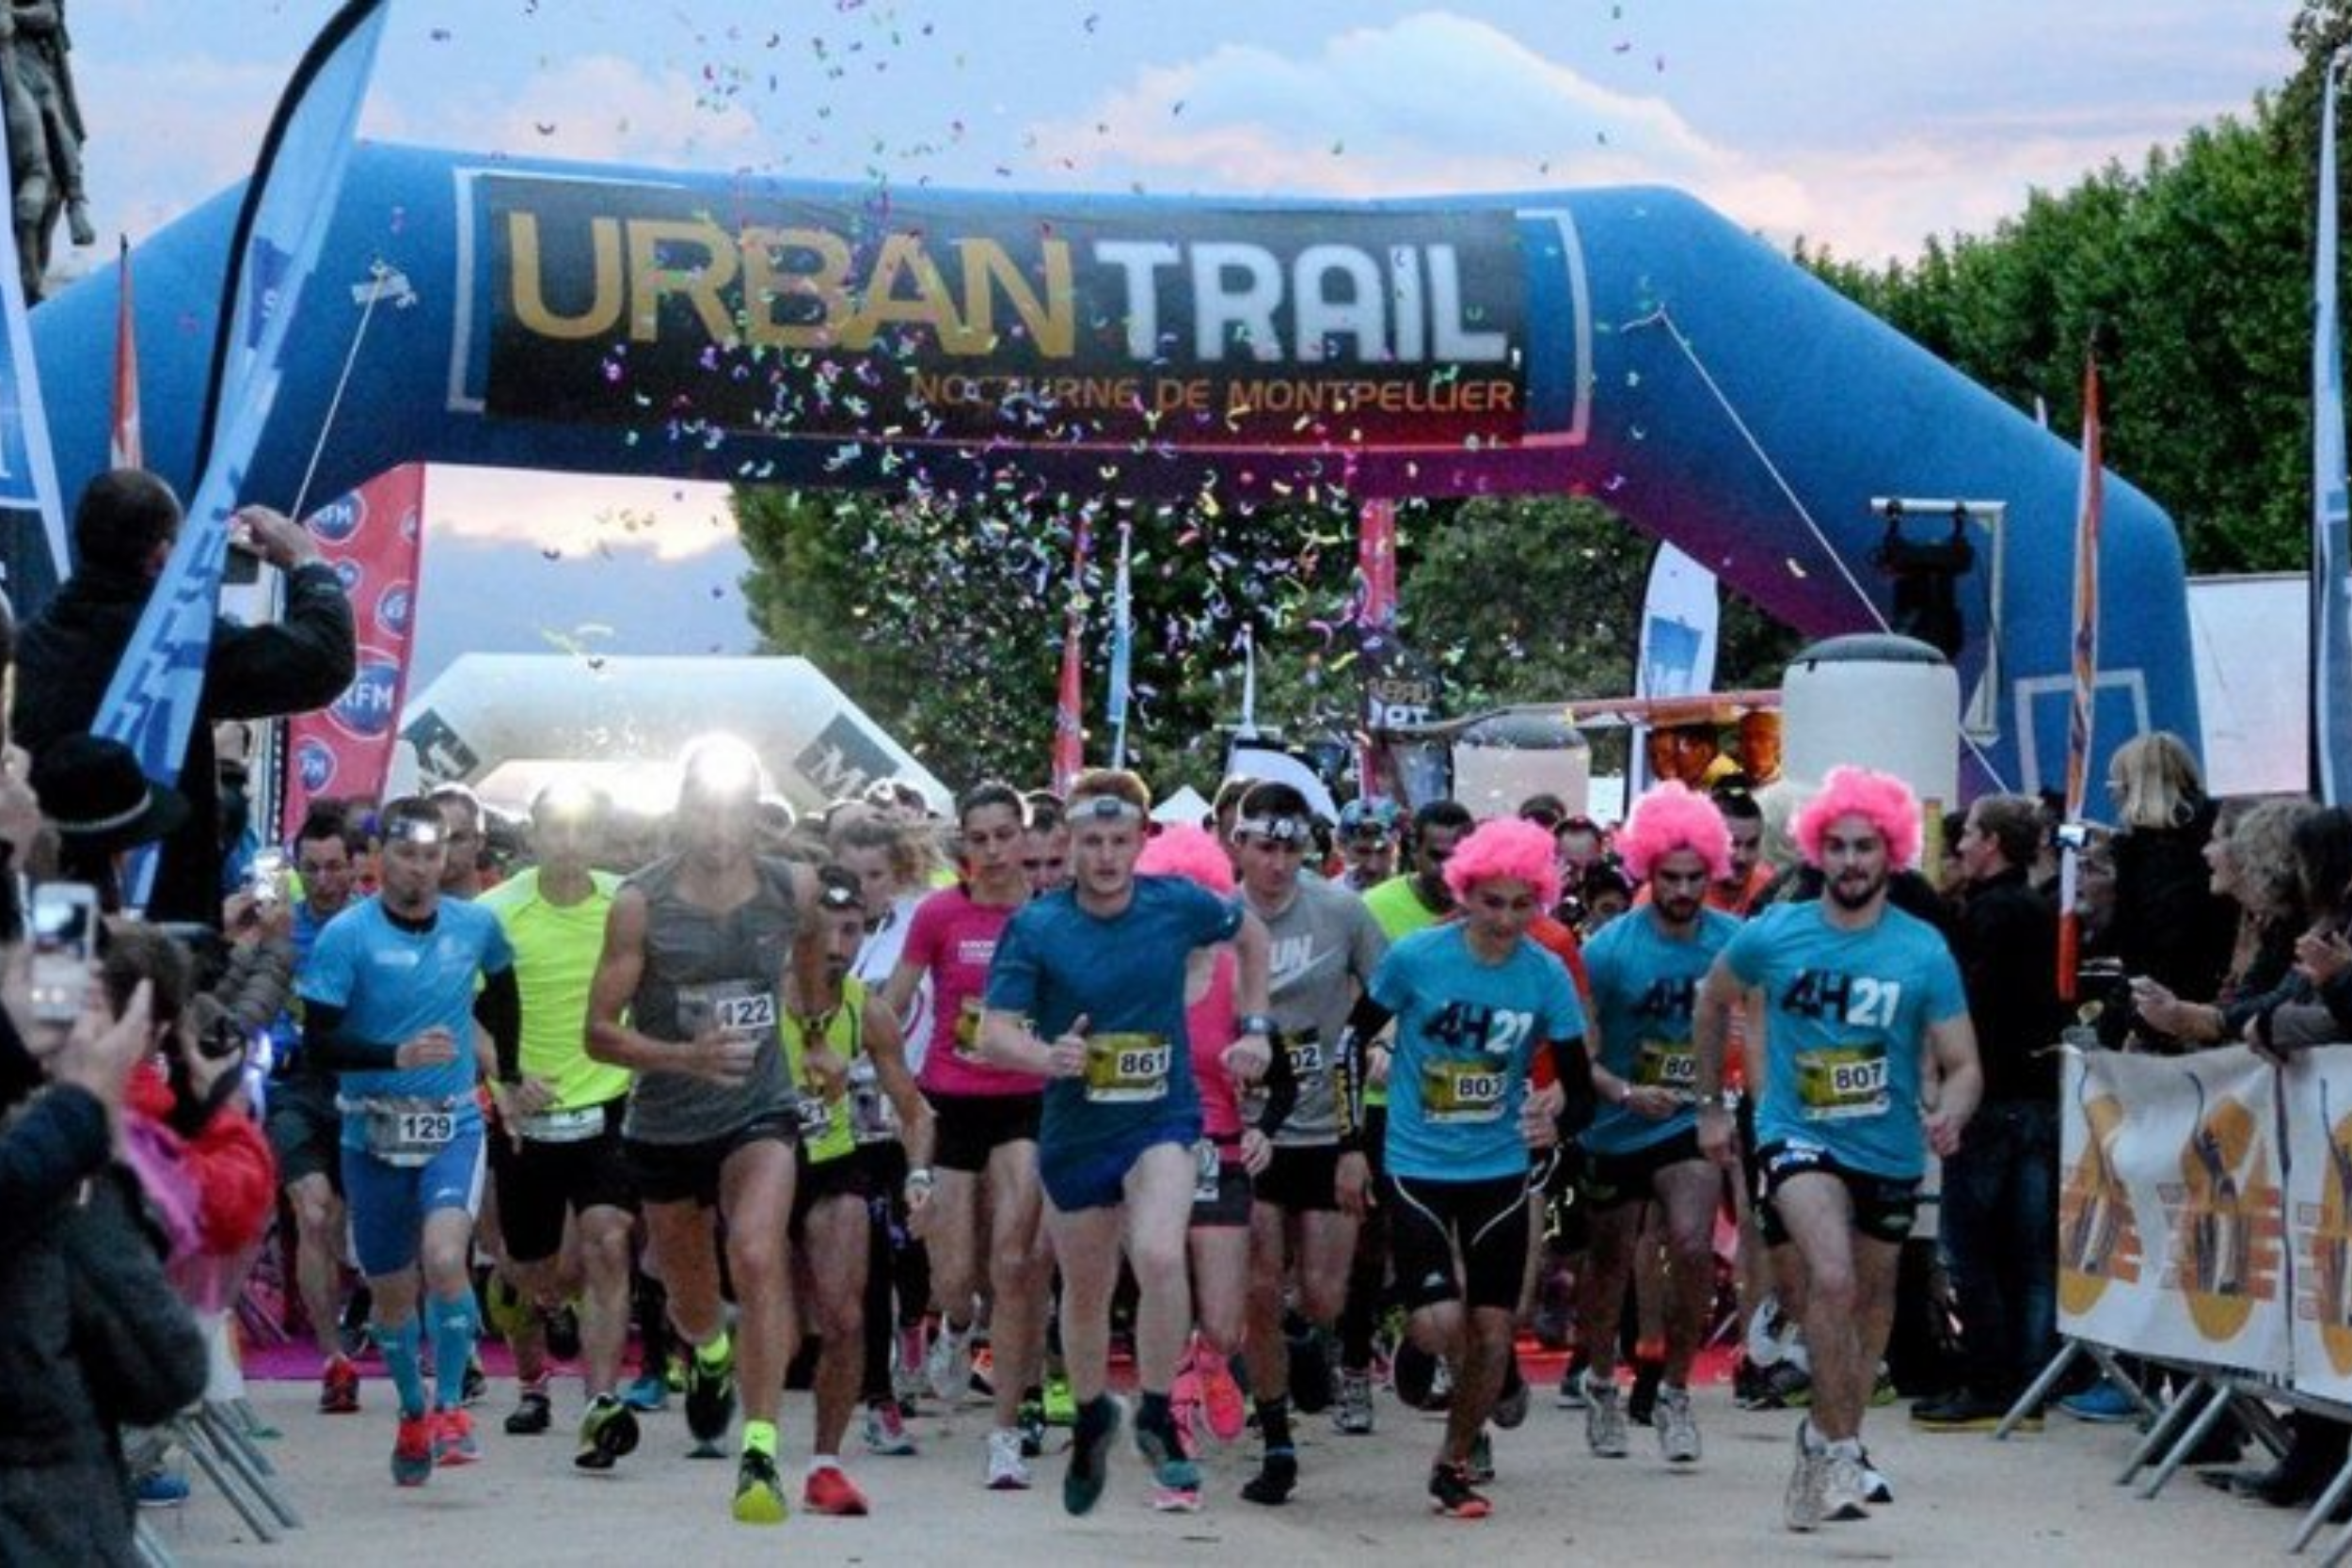 Urban Trail Montpellier -  Eventos Esportivos